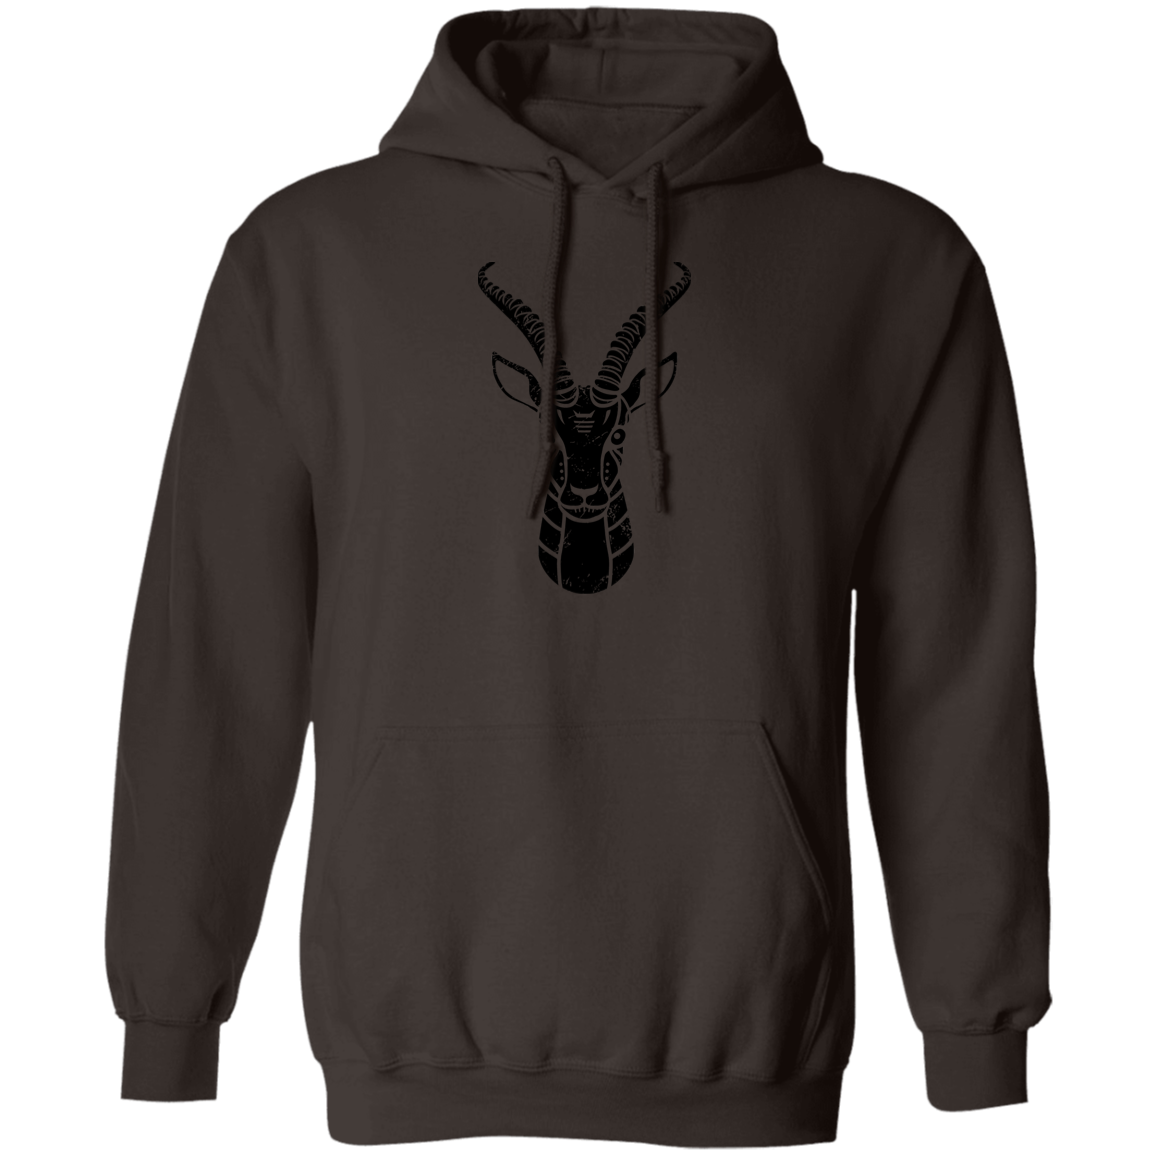 Black Distressed Emblem Hoodies for Adults (Gazelle/Grace)